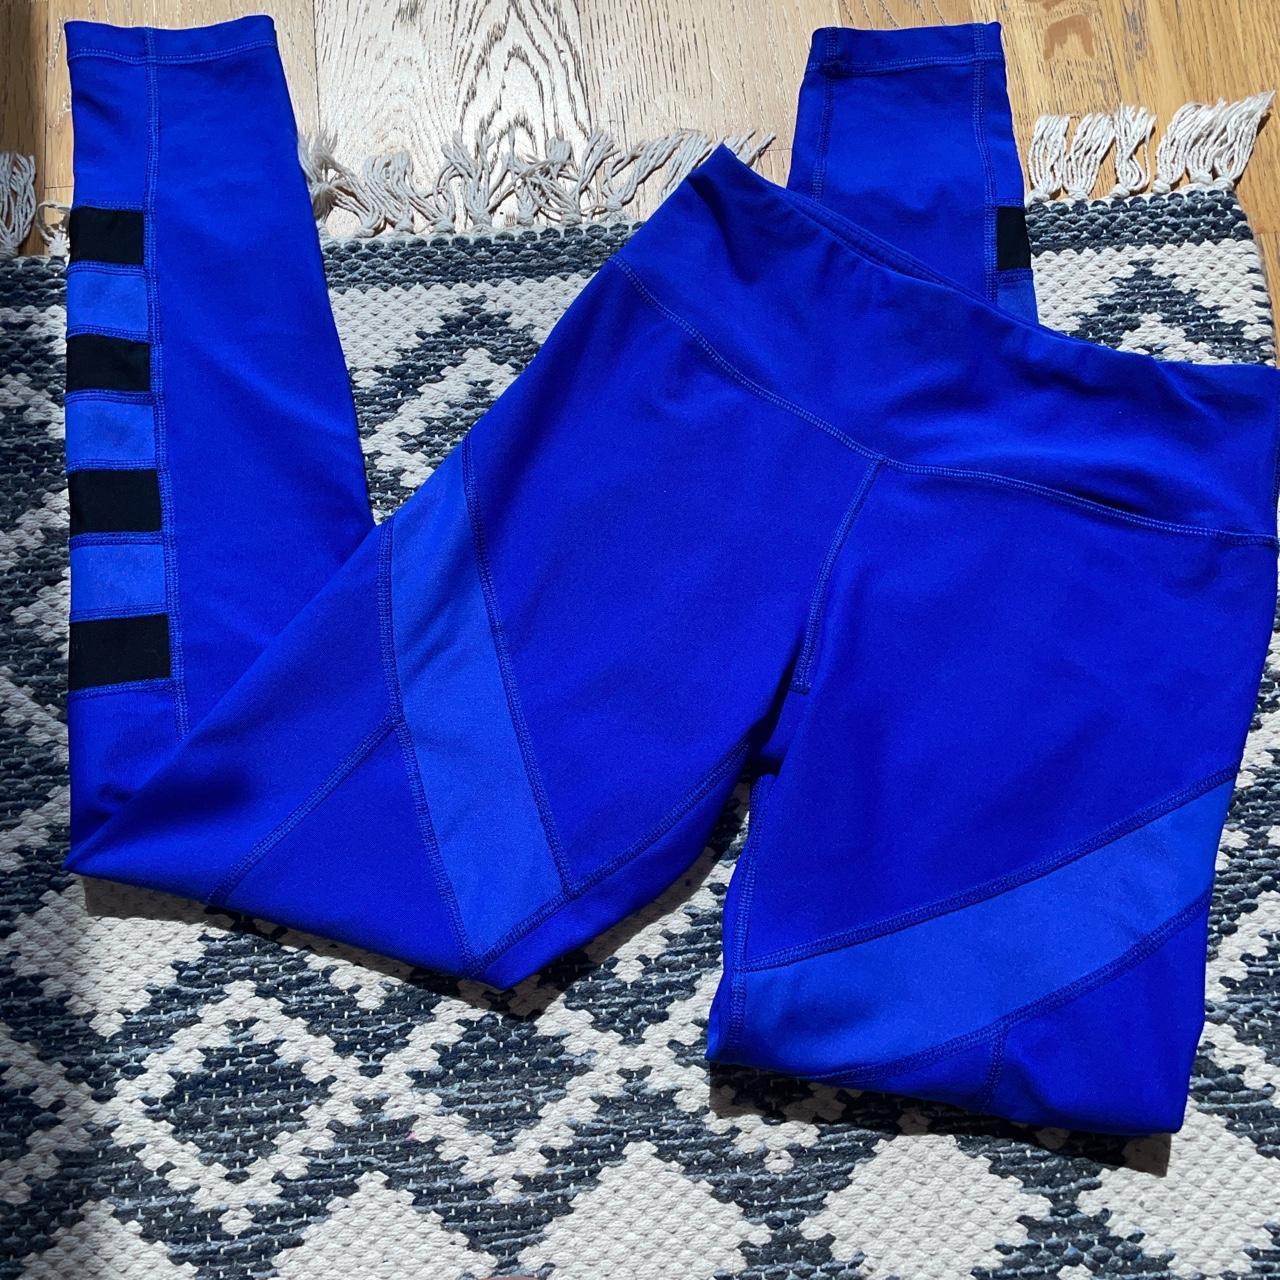 90 Degree by Reflex dark navy blue yoga pants with - Depop